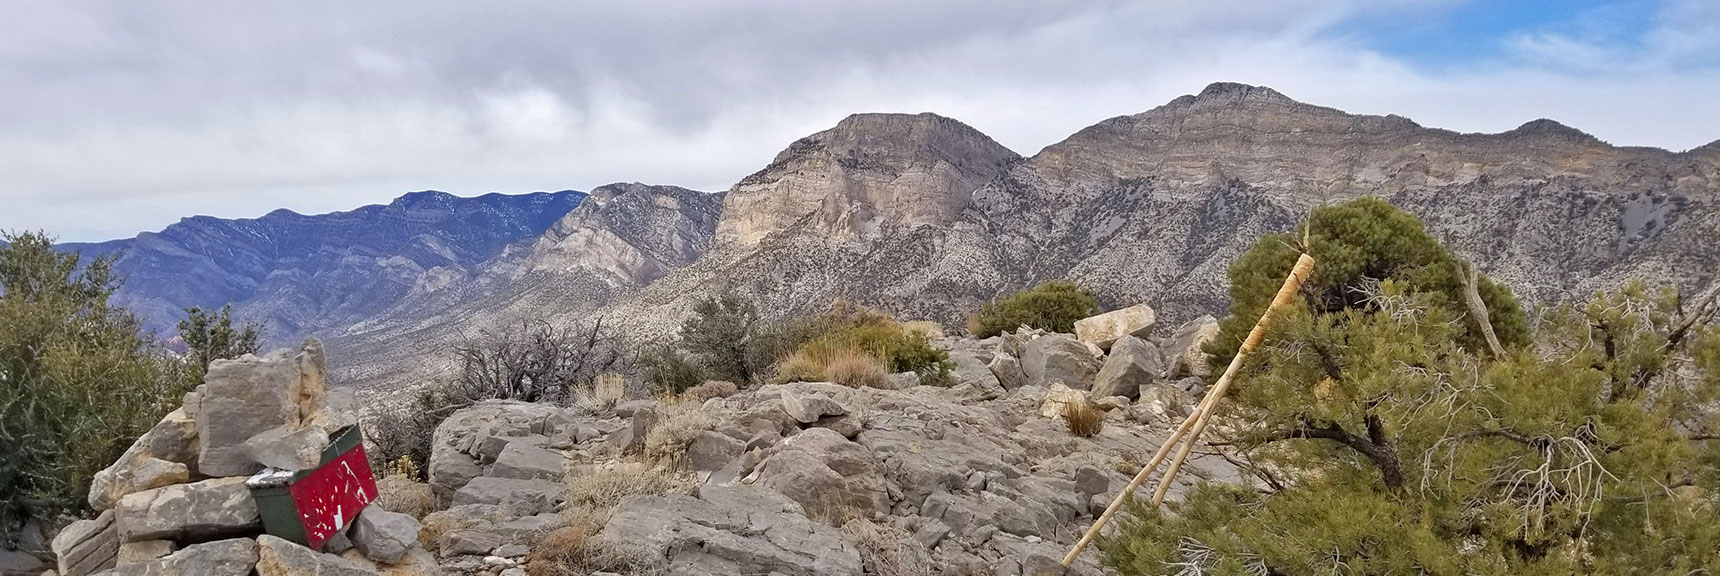 Damsel Peak Summit in Calico Basin, Nevada 003